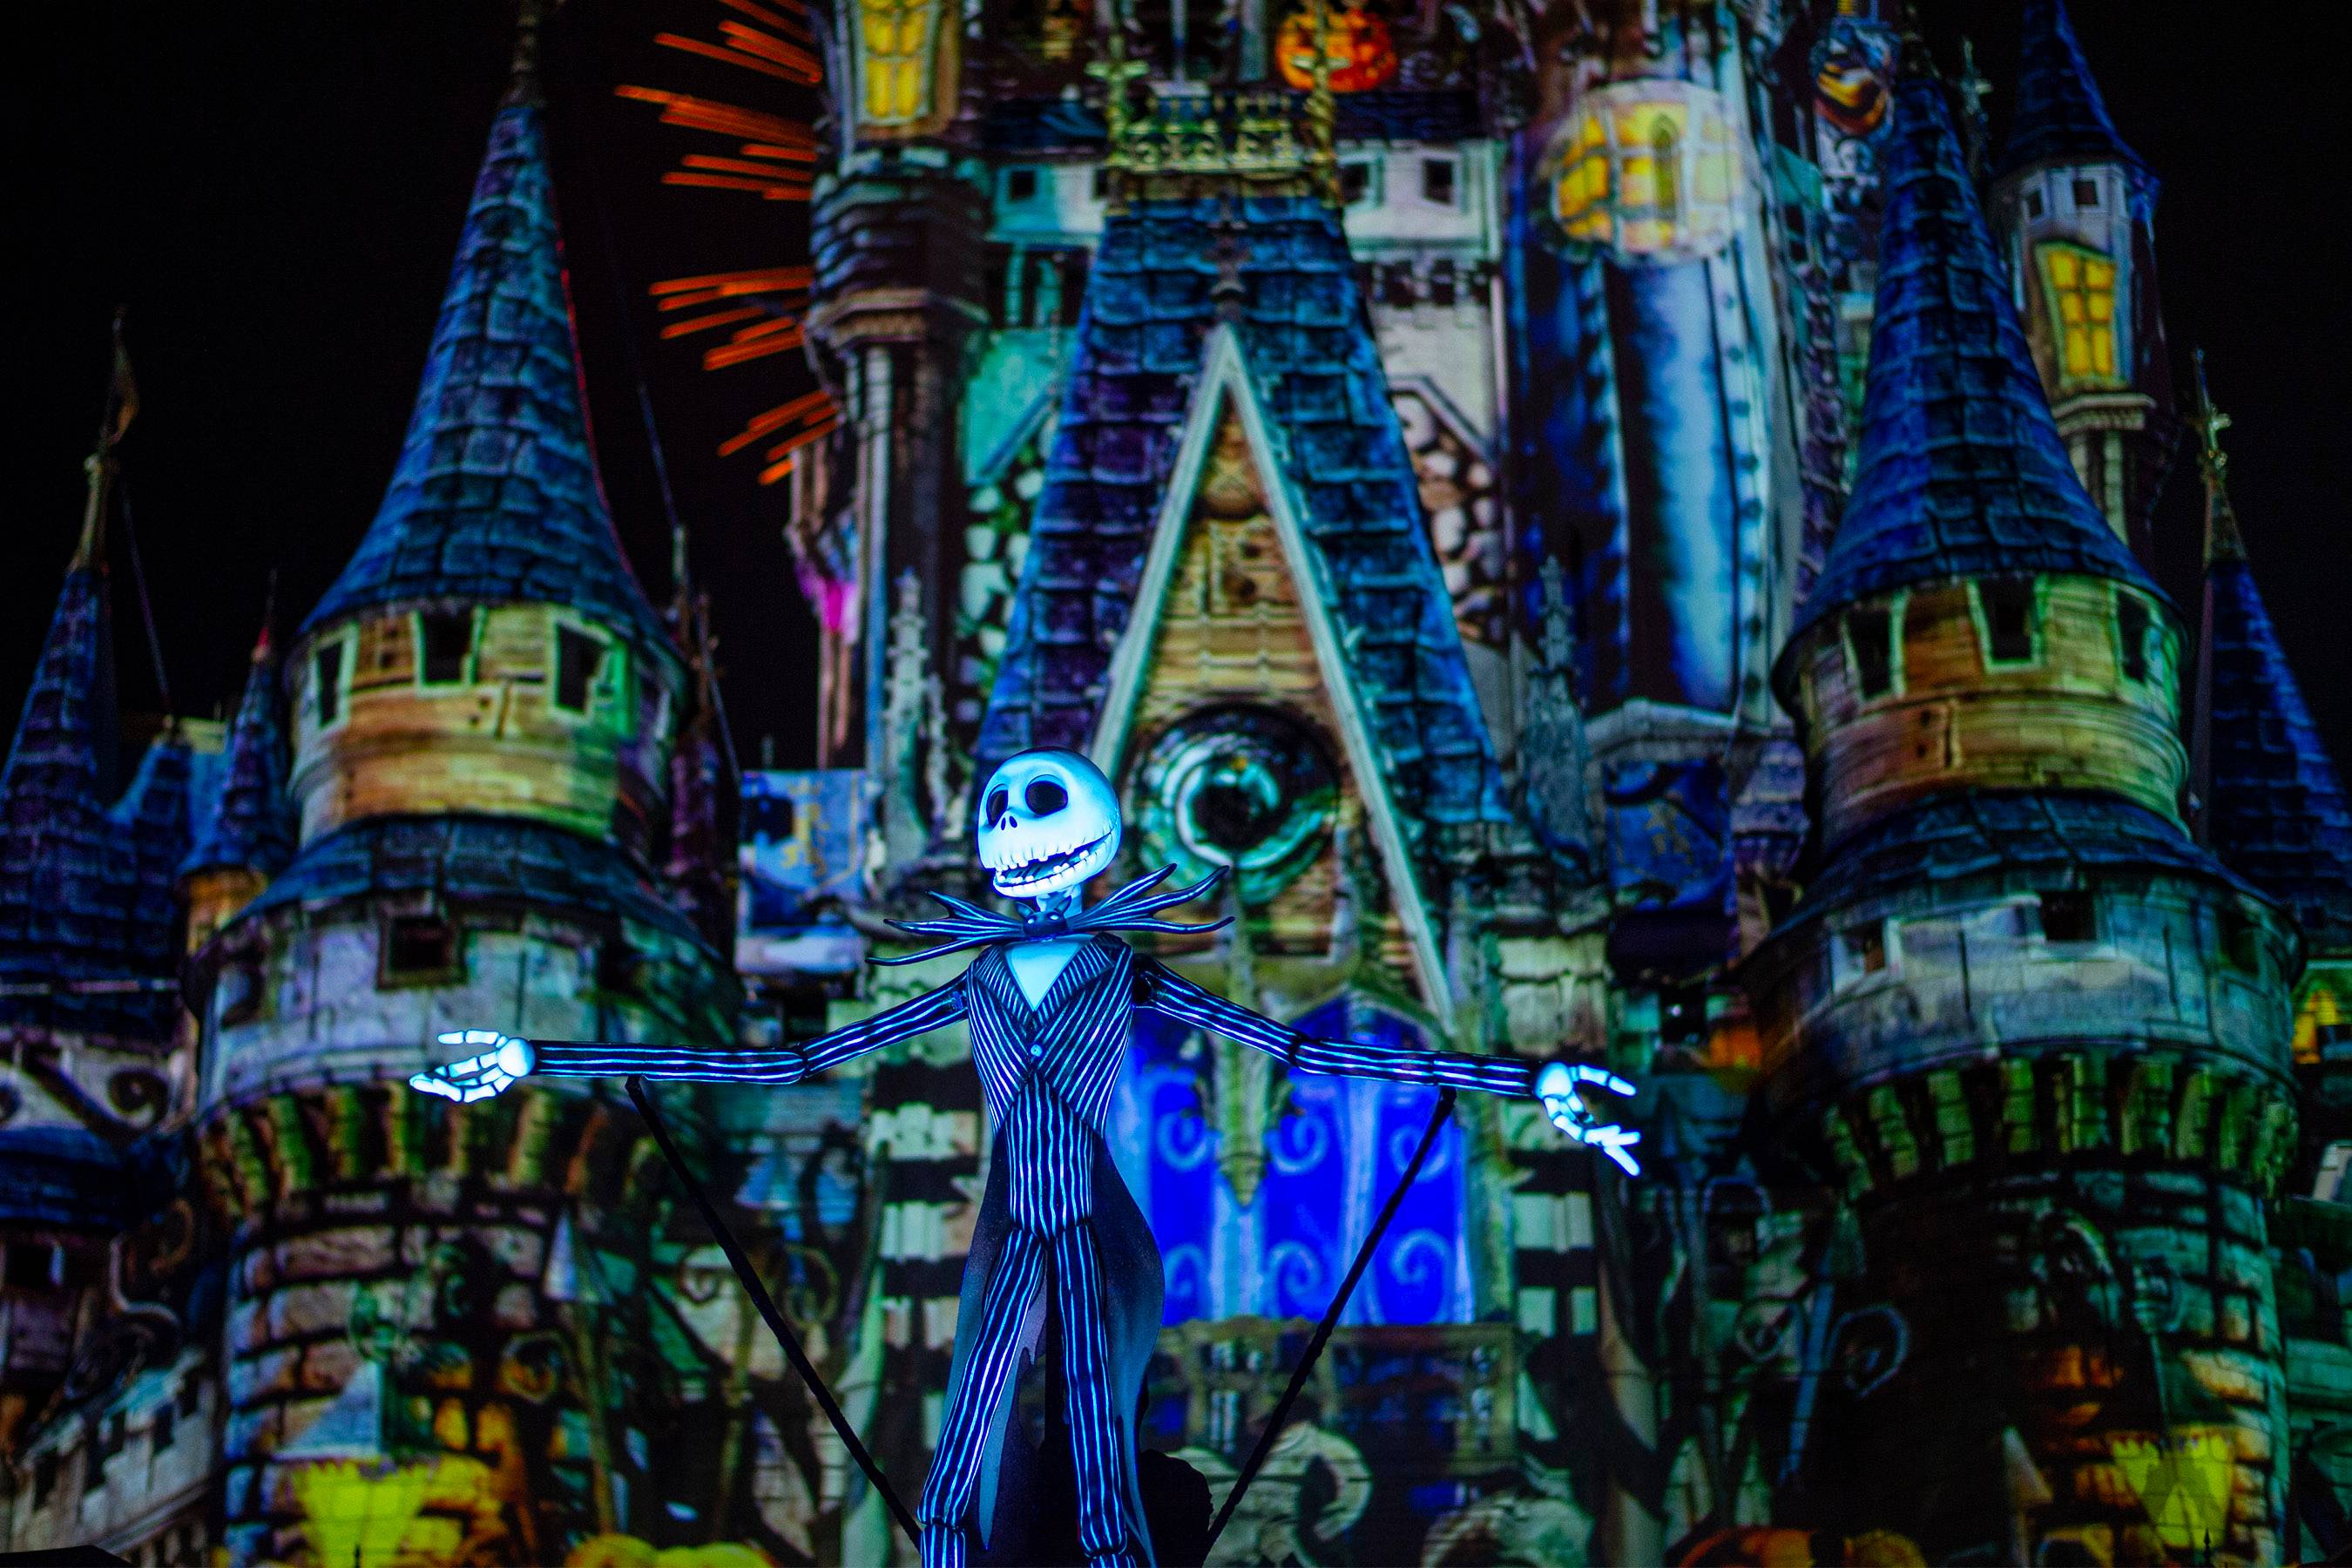 Disney's Not So Spooky Spectacular show